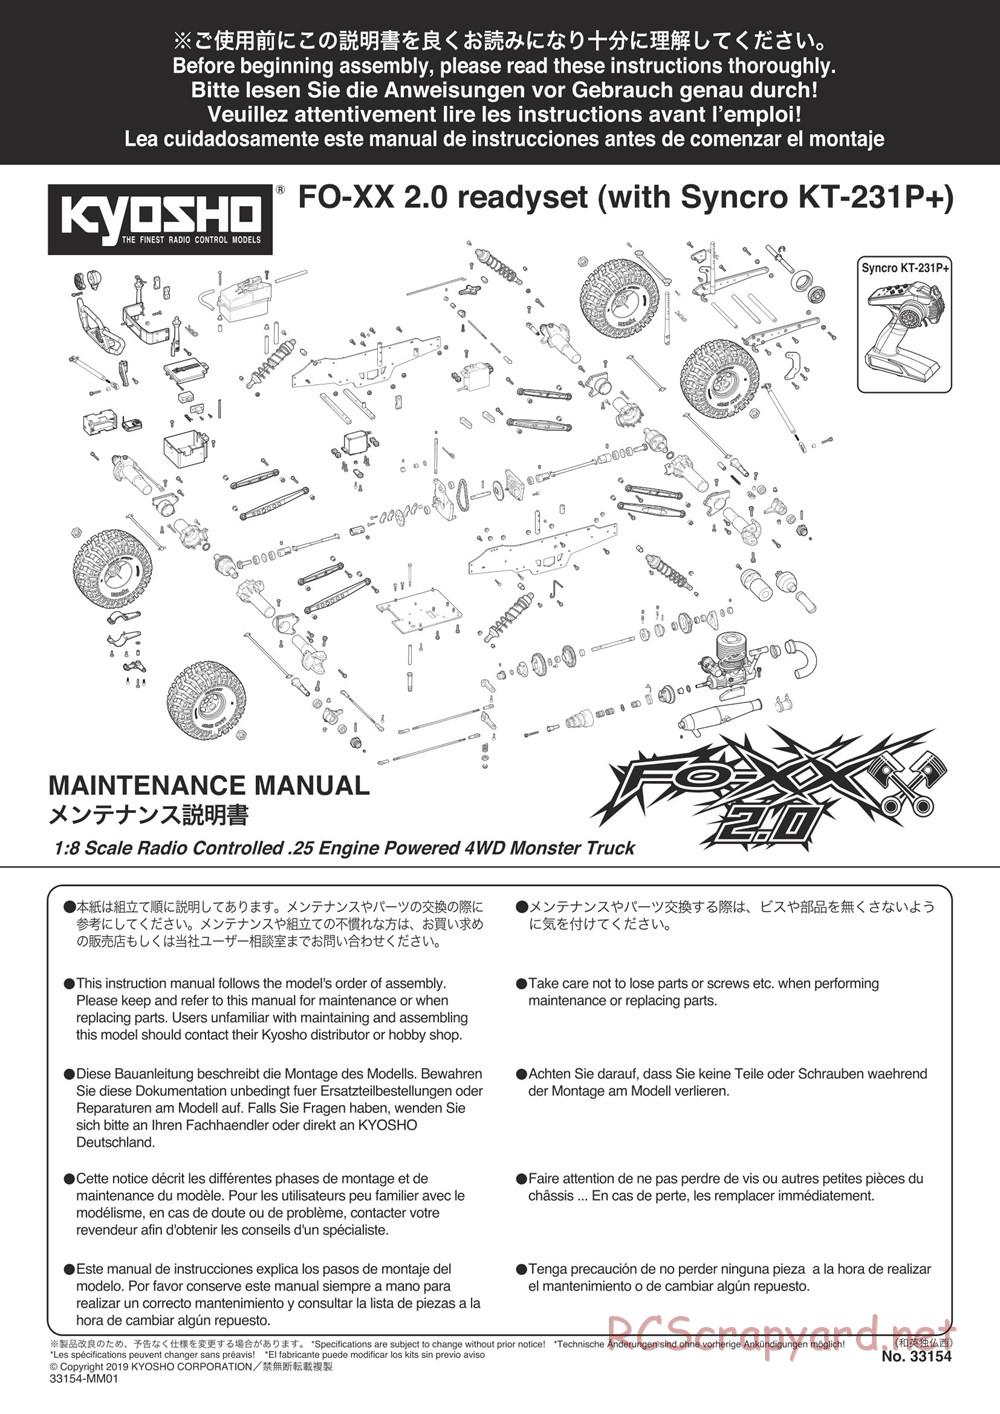 Kyosho - FO-XX 2.0 - Manual - Page 1